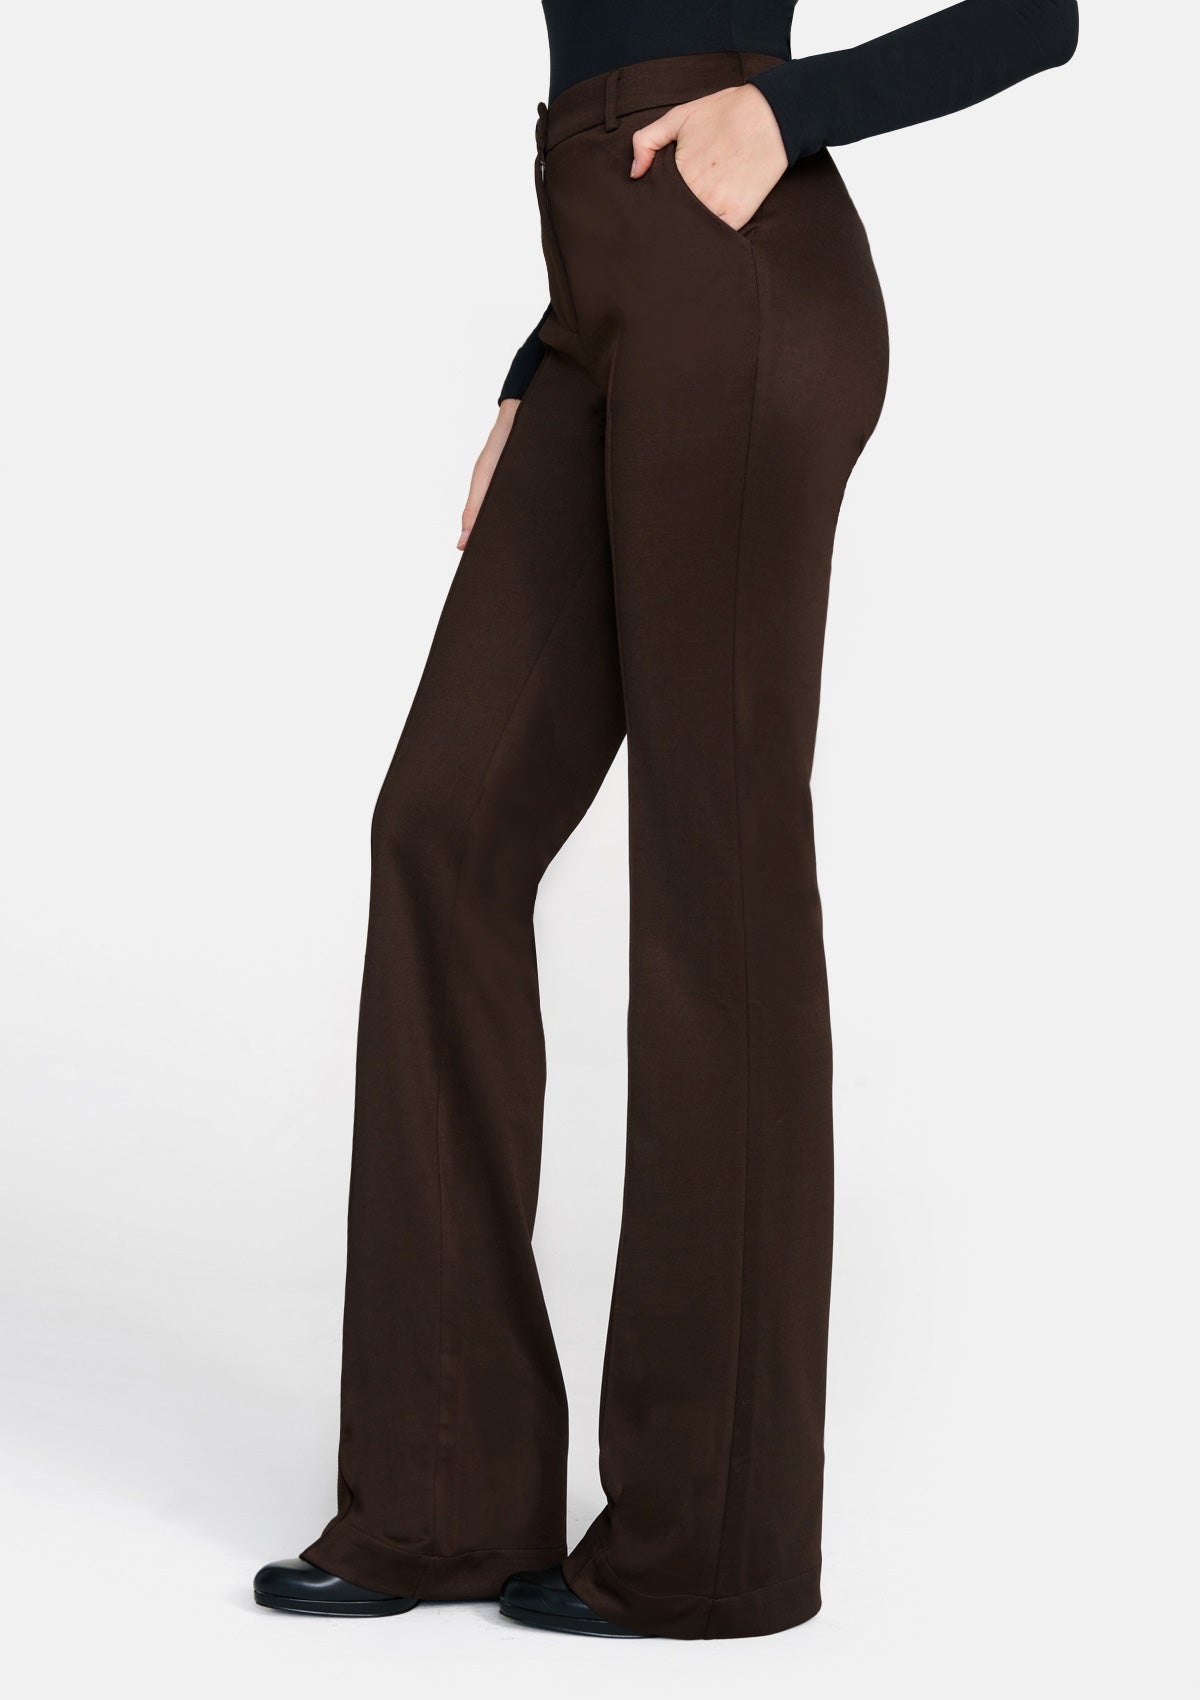 Buy Athlisis Women Black High Waist Tall Flare Pants Online